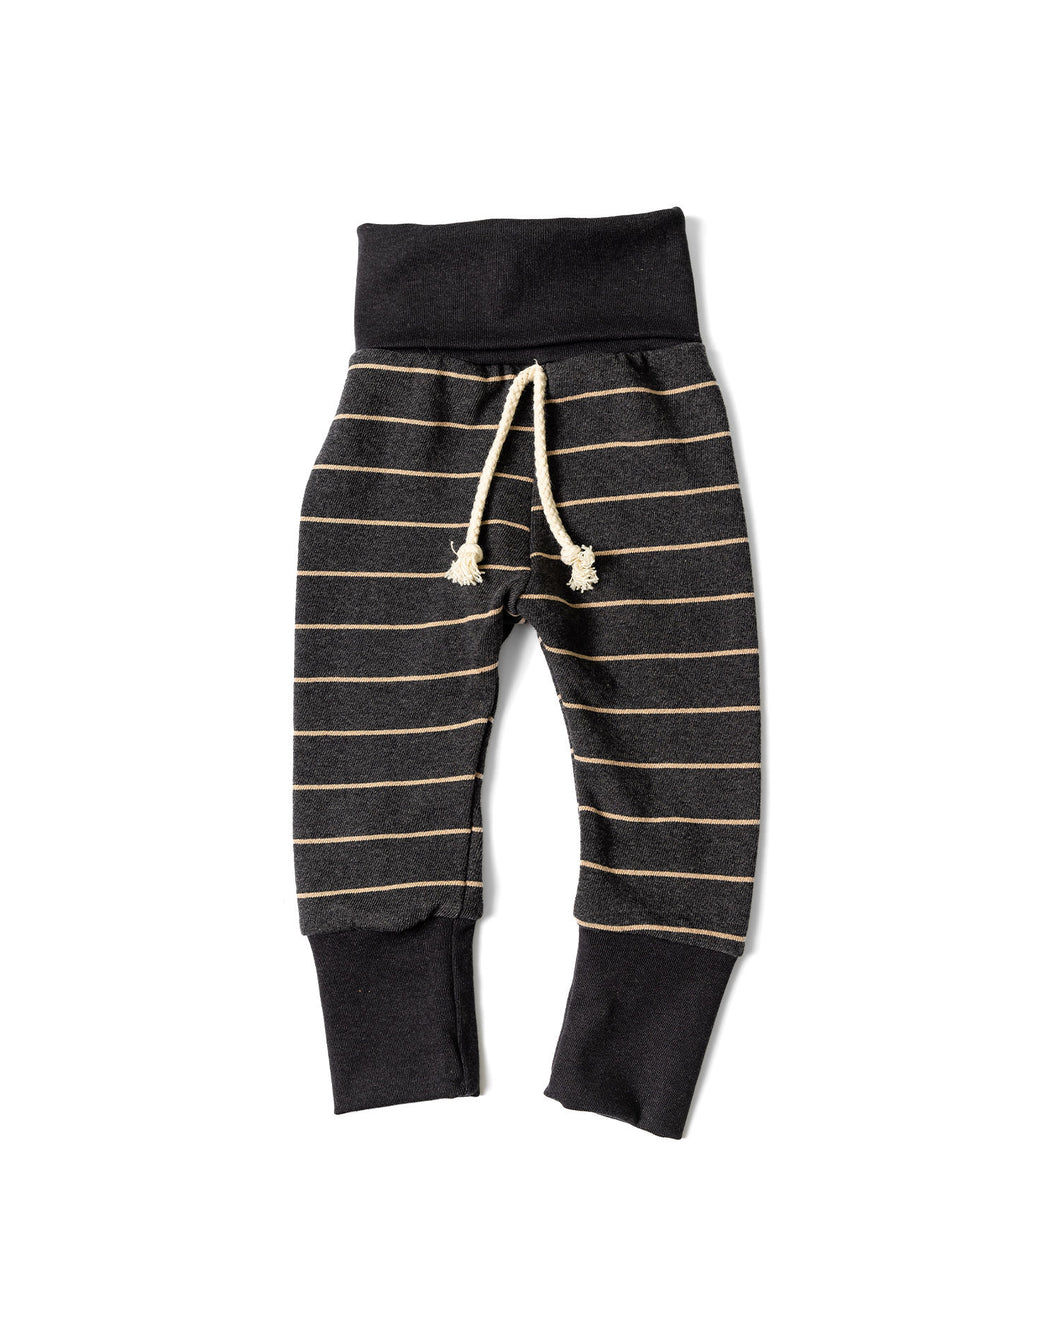 skinny sweats - dark breton stripe